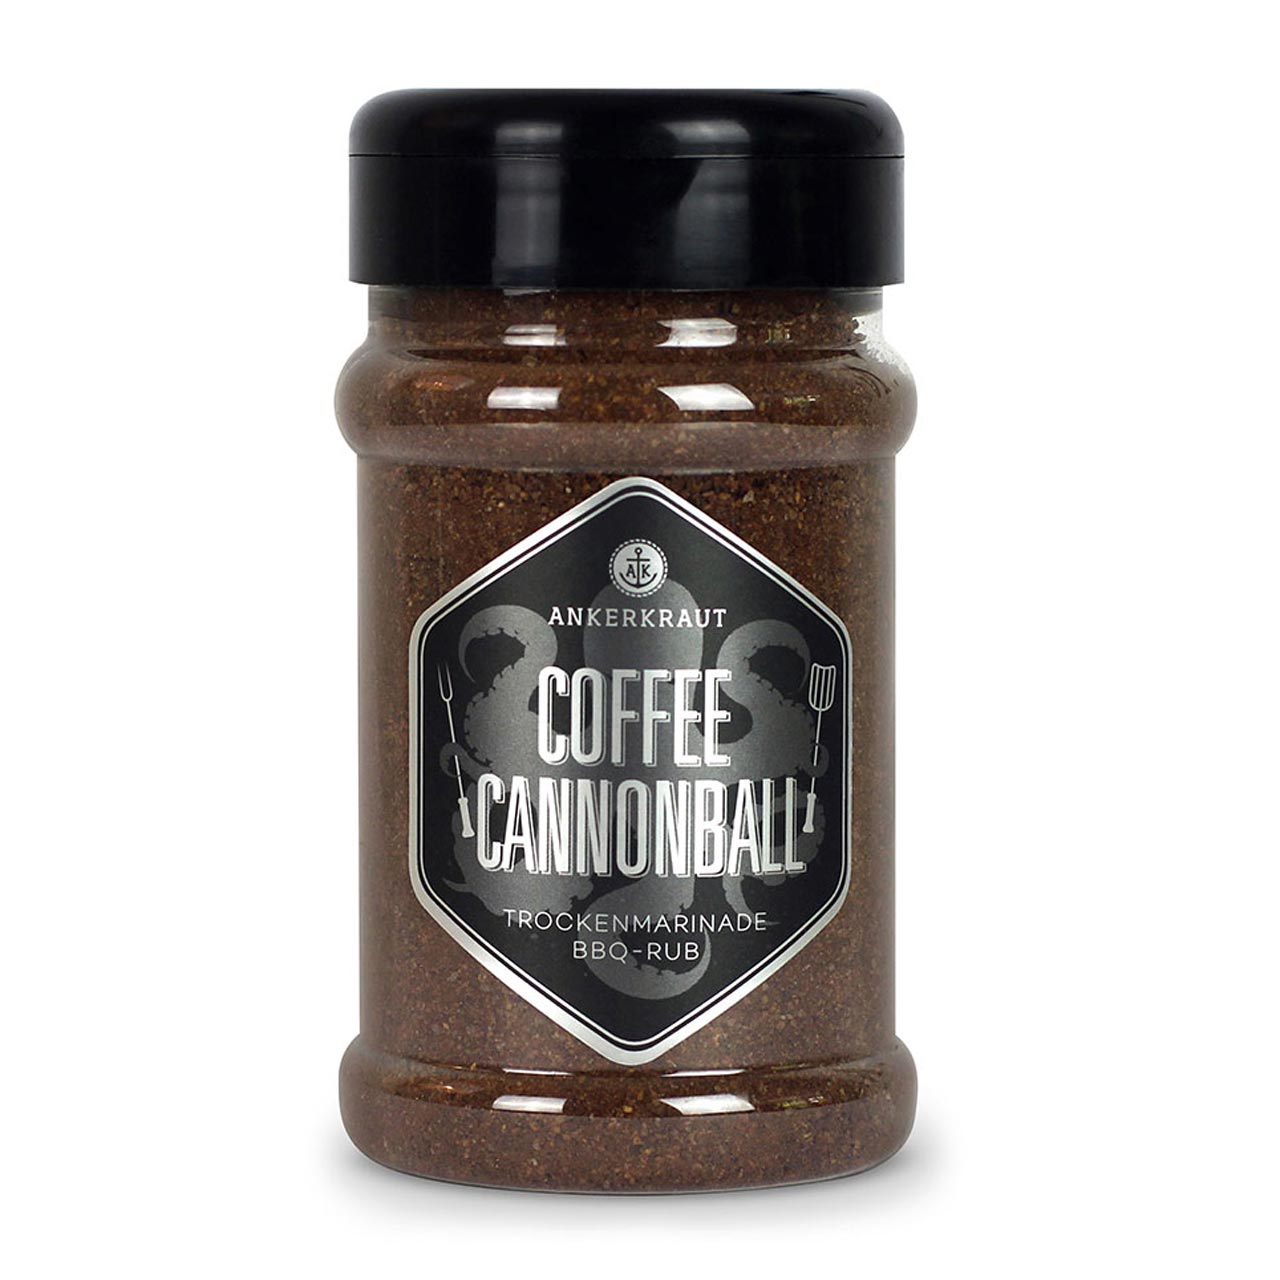 Ankerkraut Coffee Cannonball